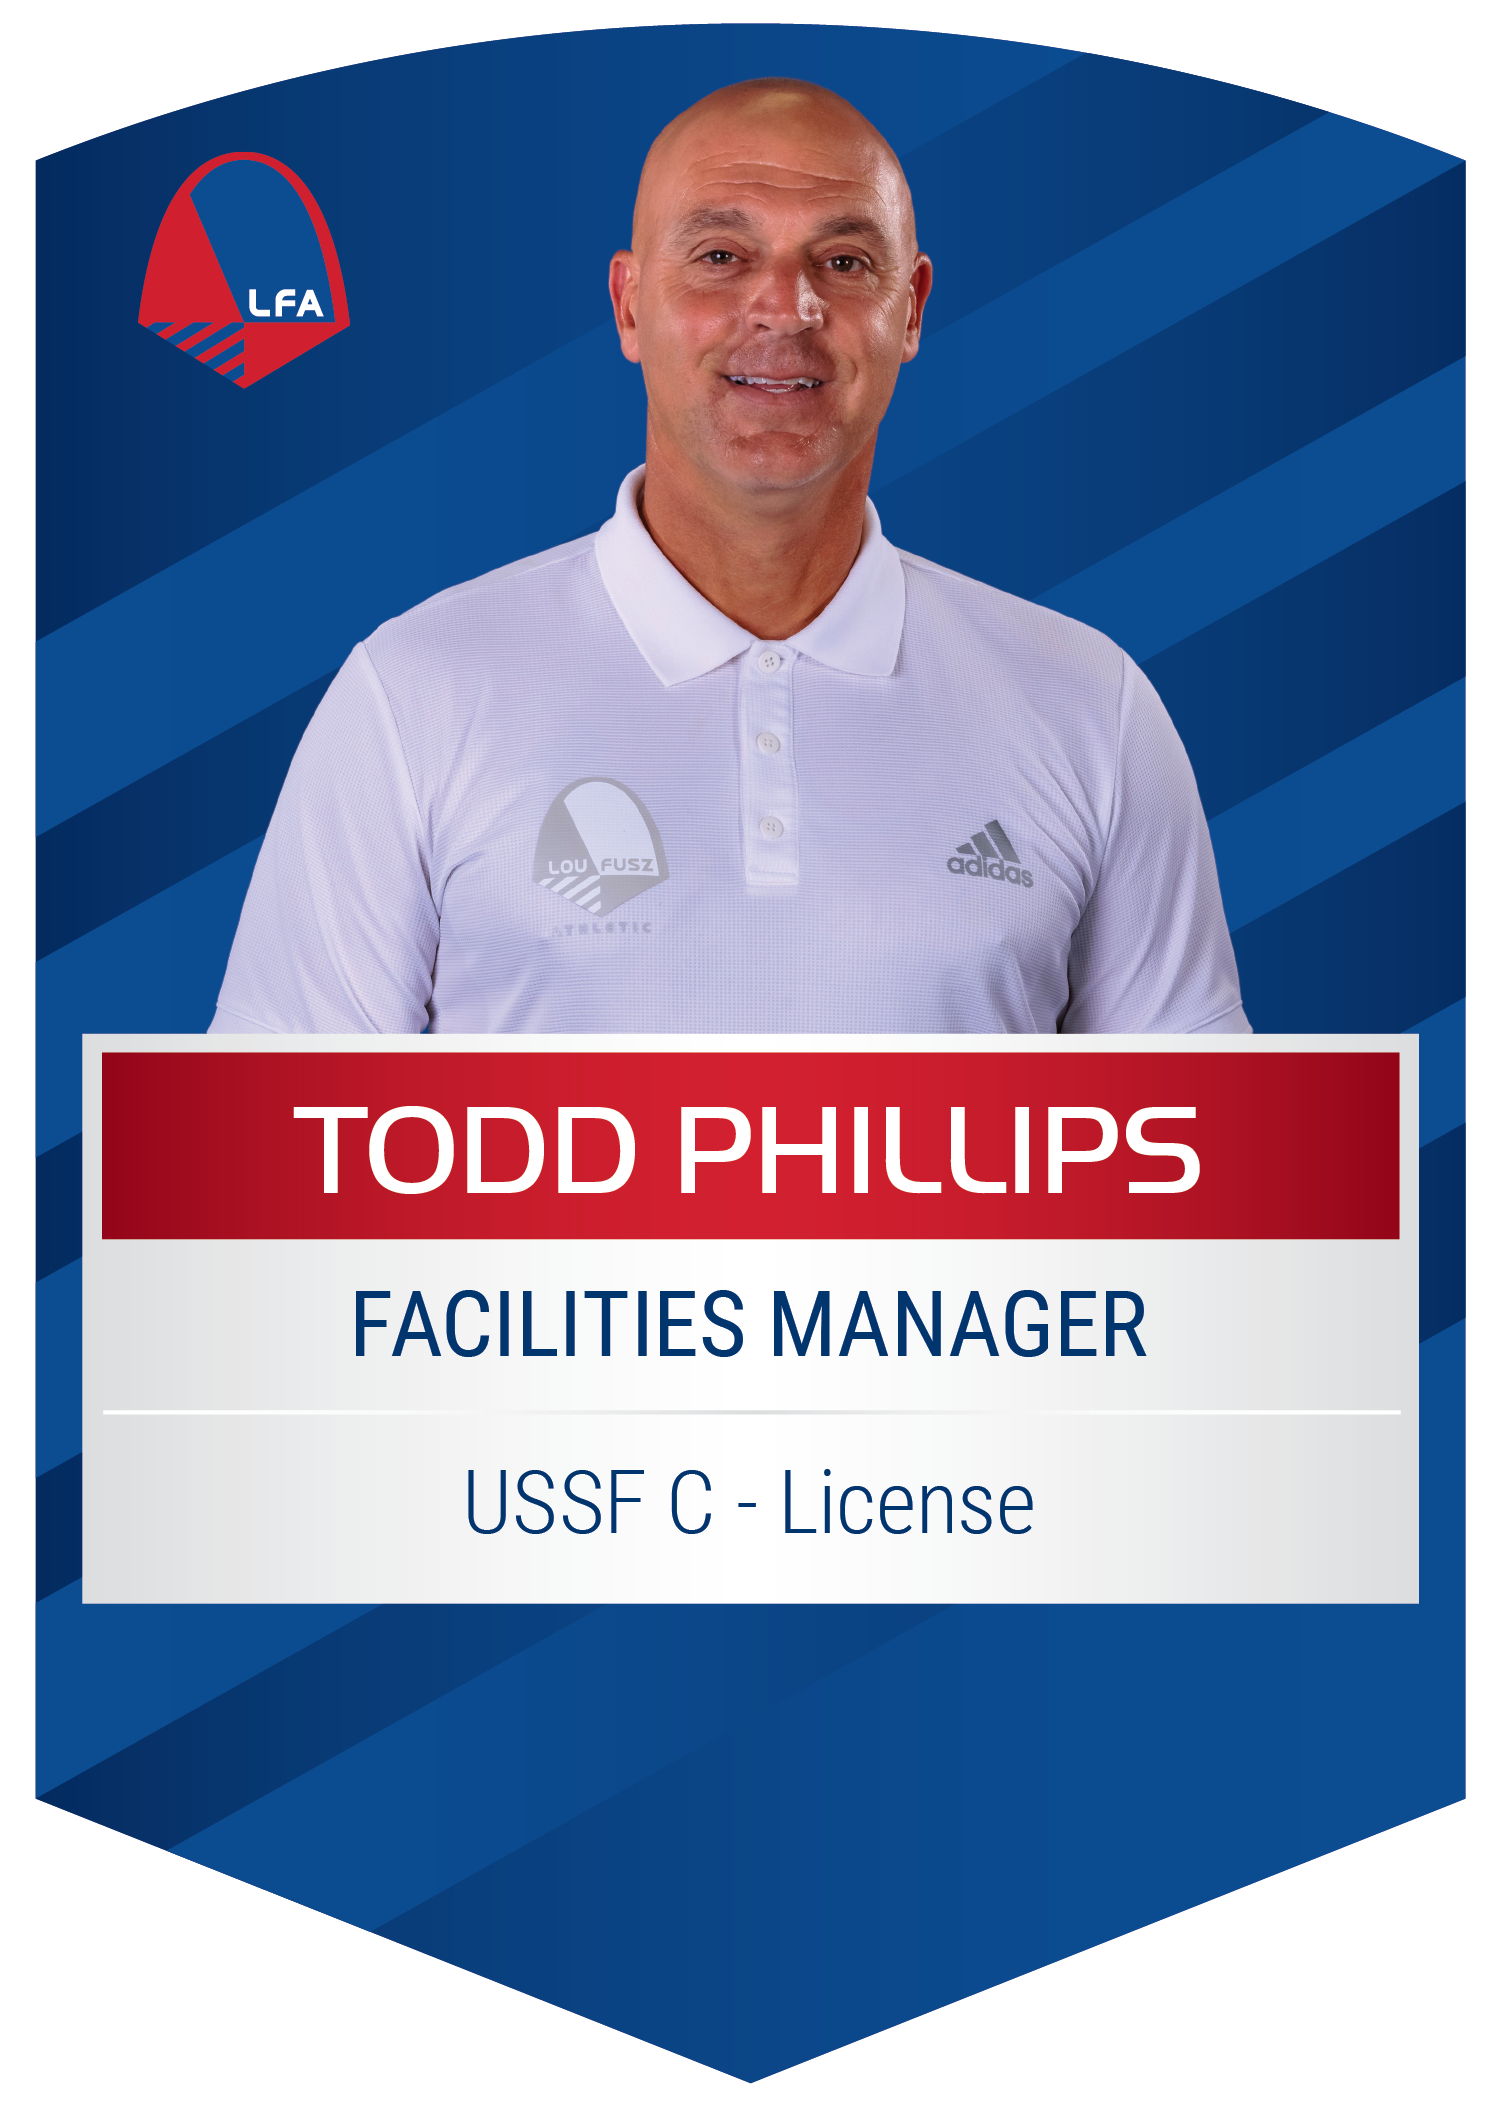 Todd Phillips